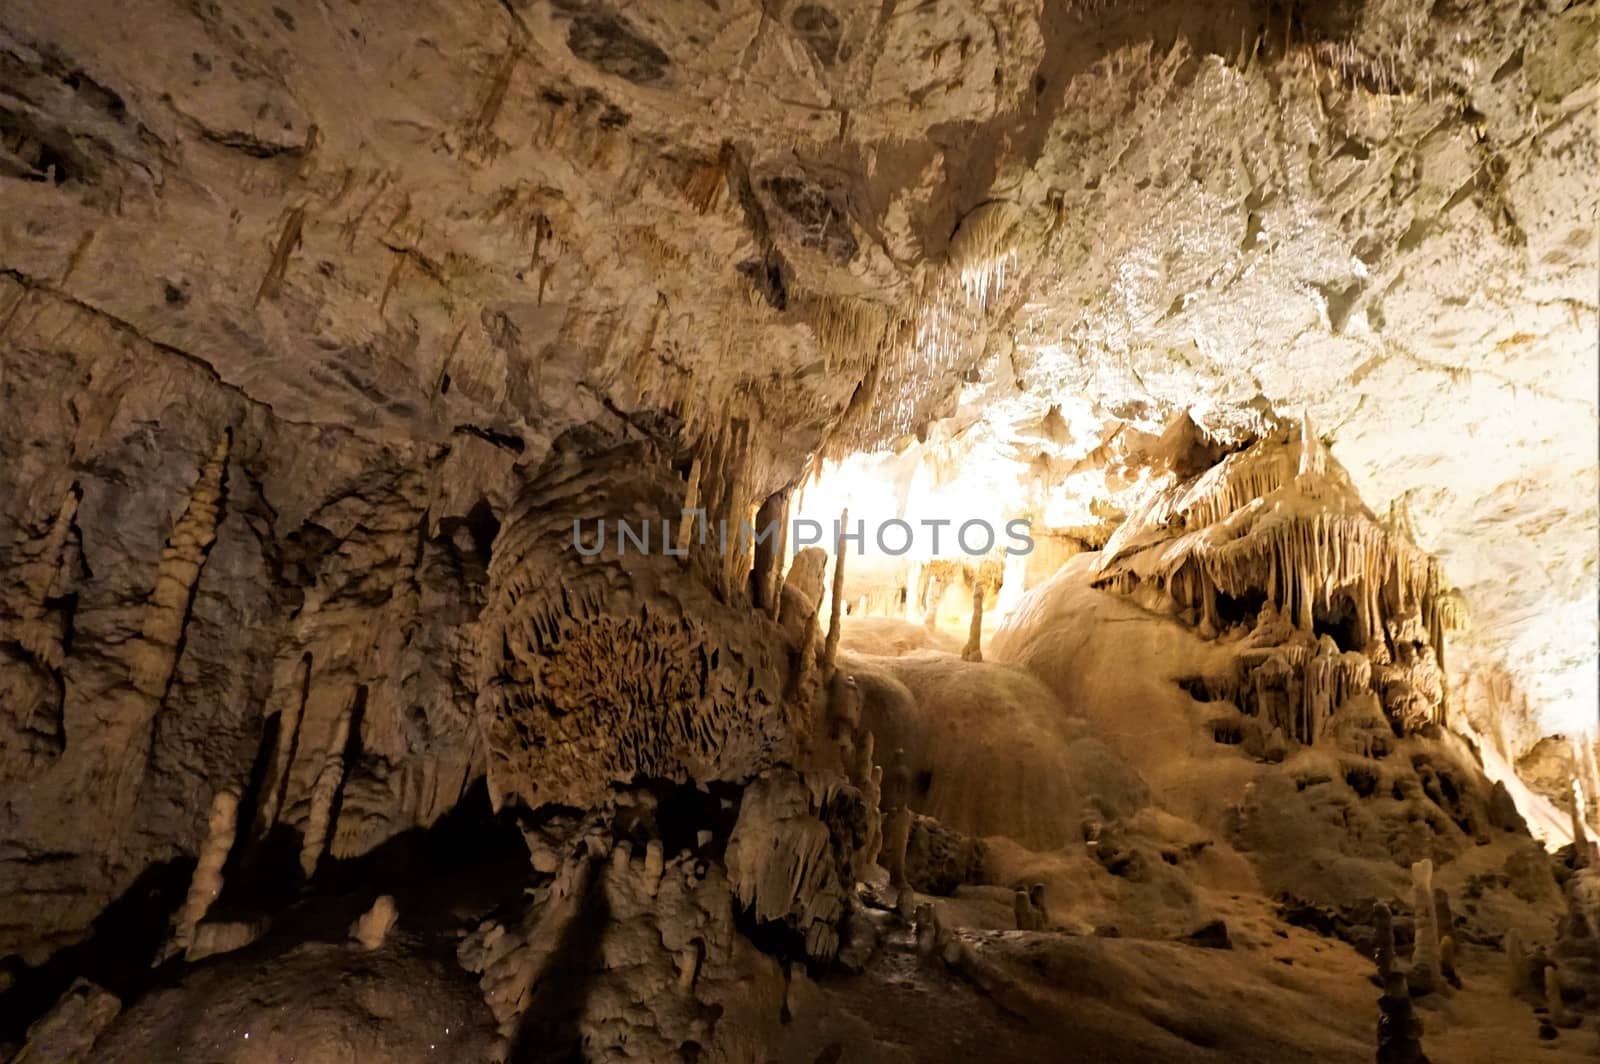 Surreal dripstones in the Postojna cave, Slovenia